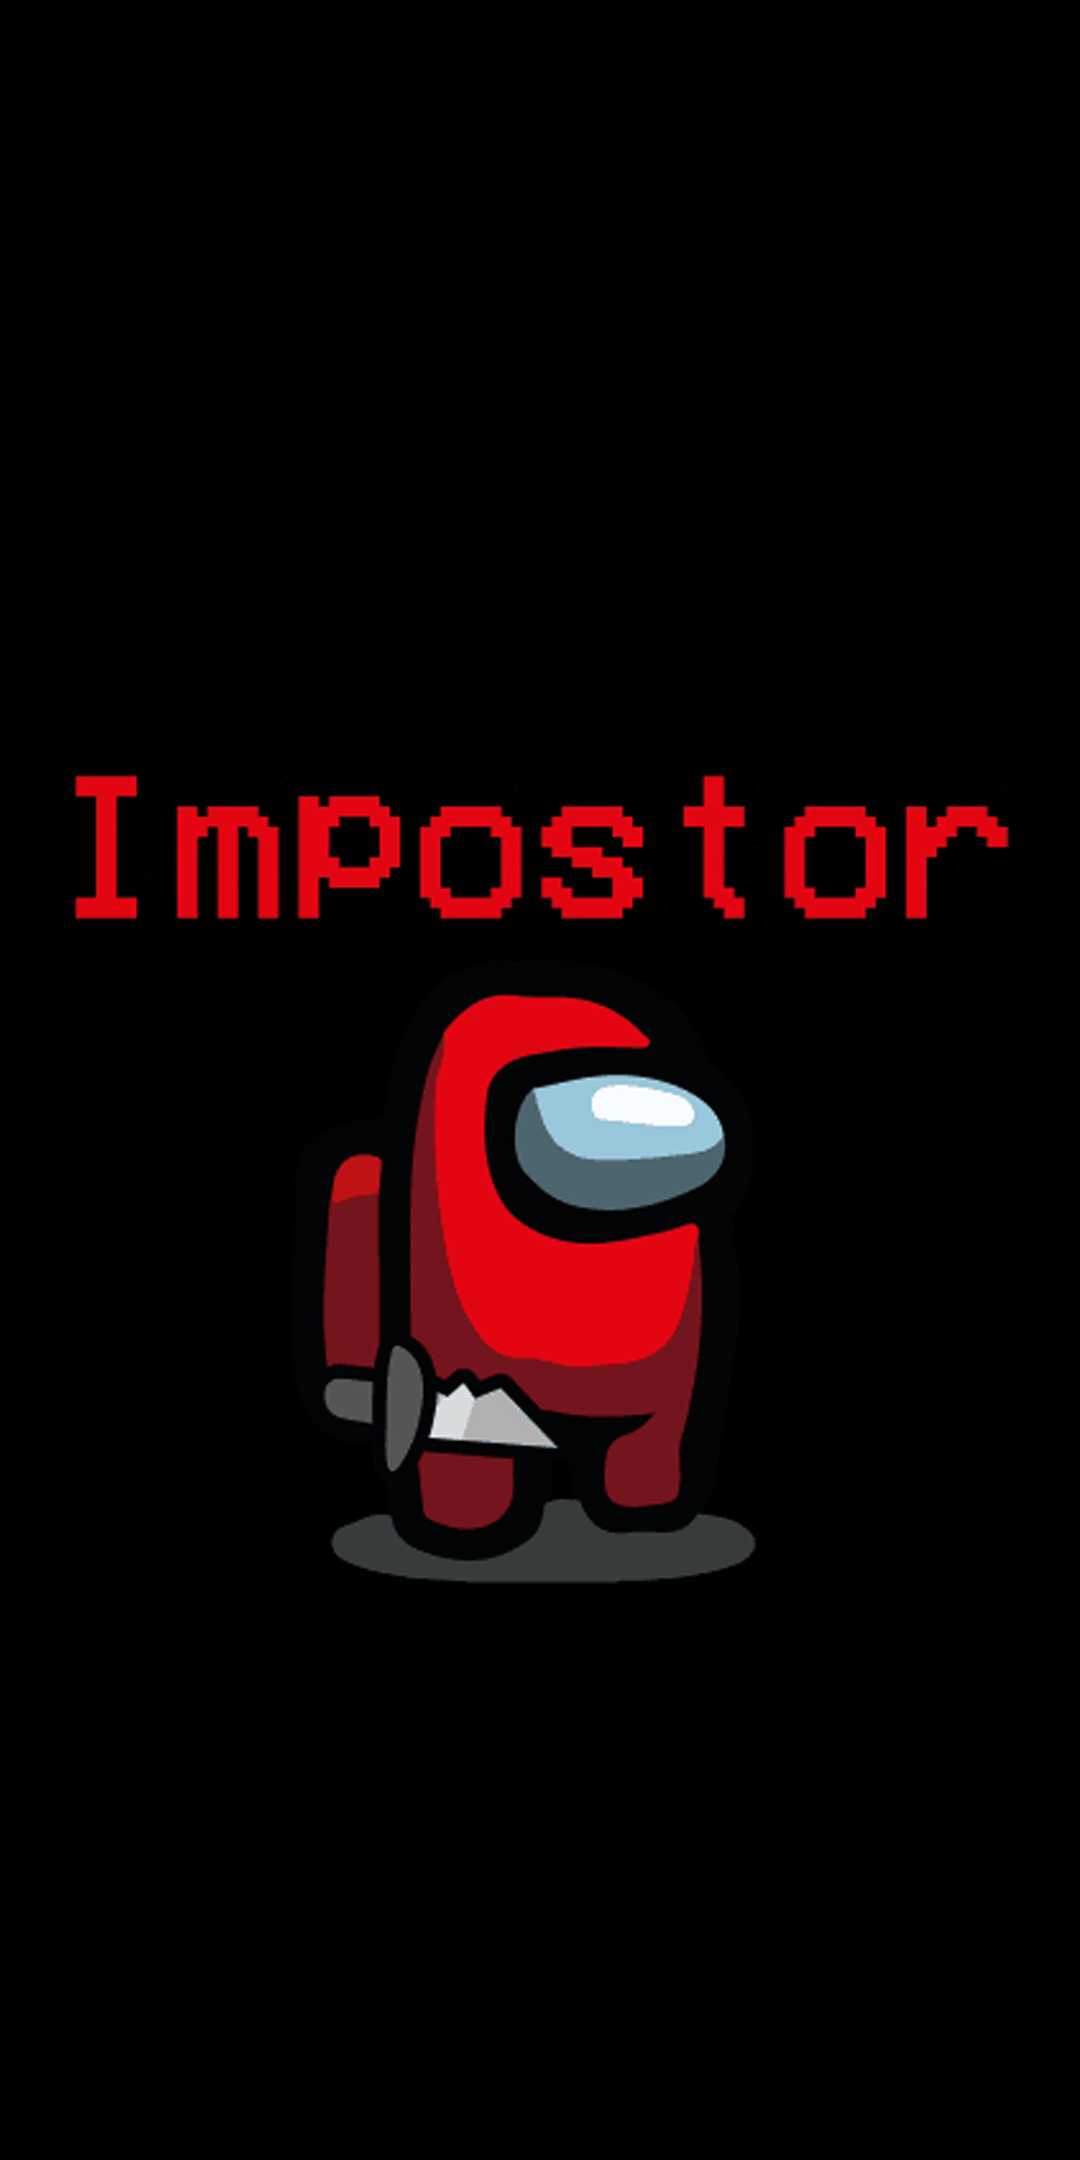 Among Us Impostor Wallpaper - iXpap